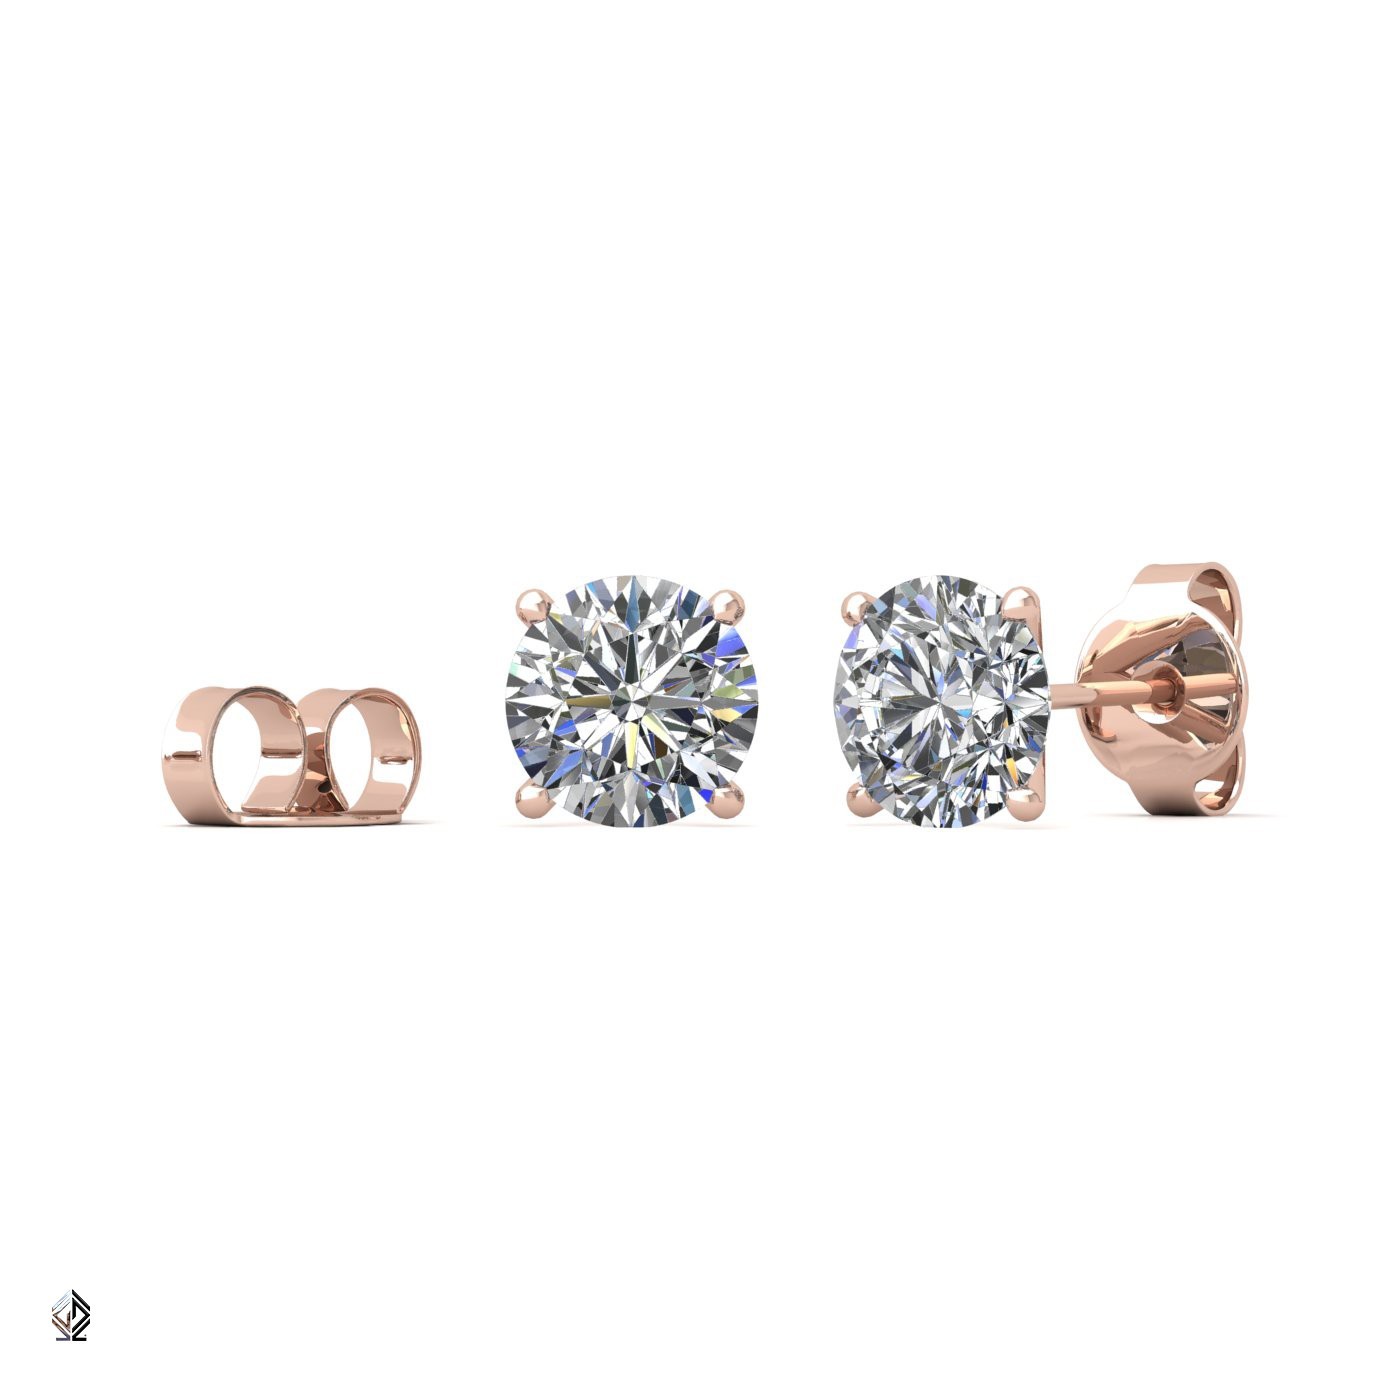 18k rose gold 0,5 ct 4 prongs round cut classic diamond earring studs